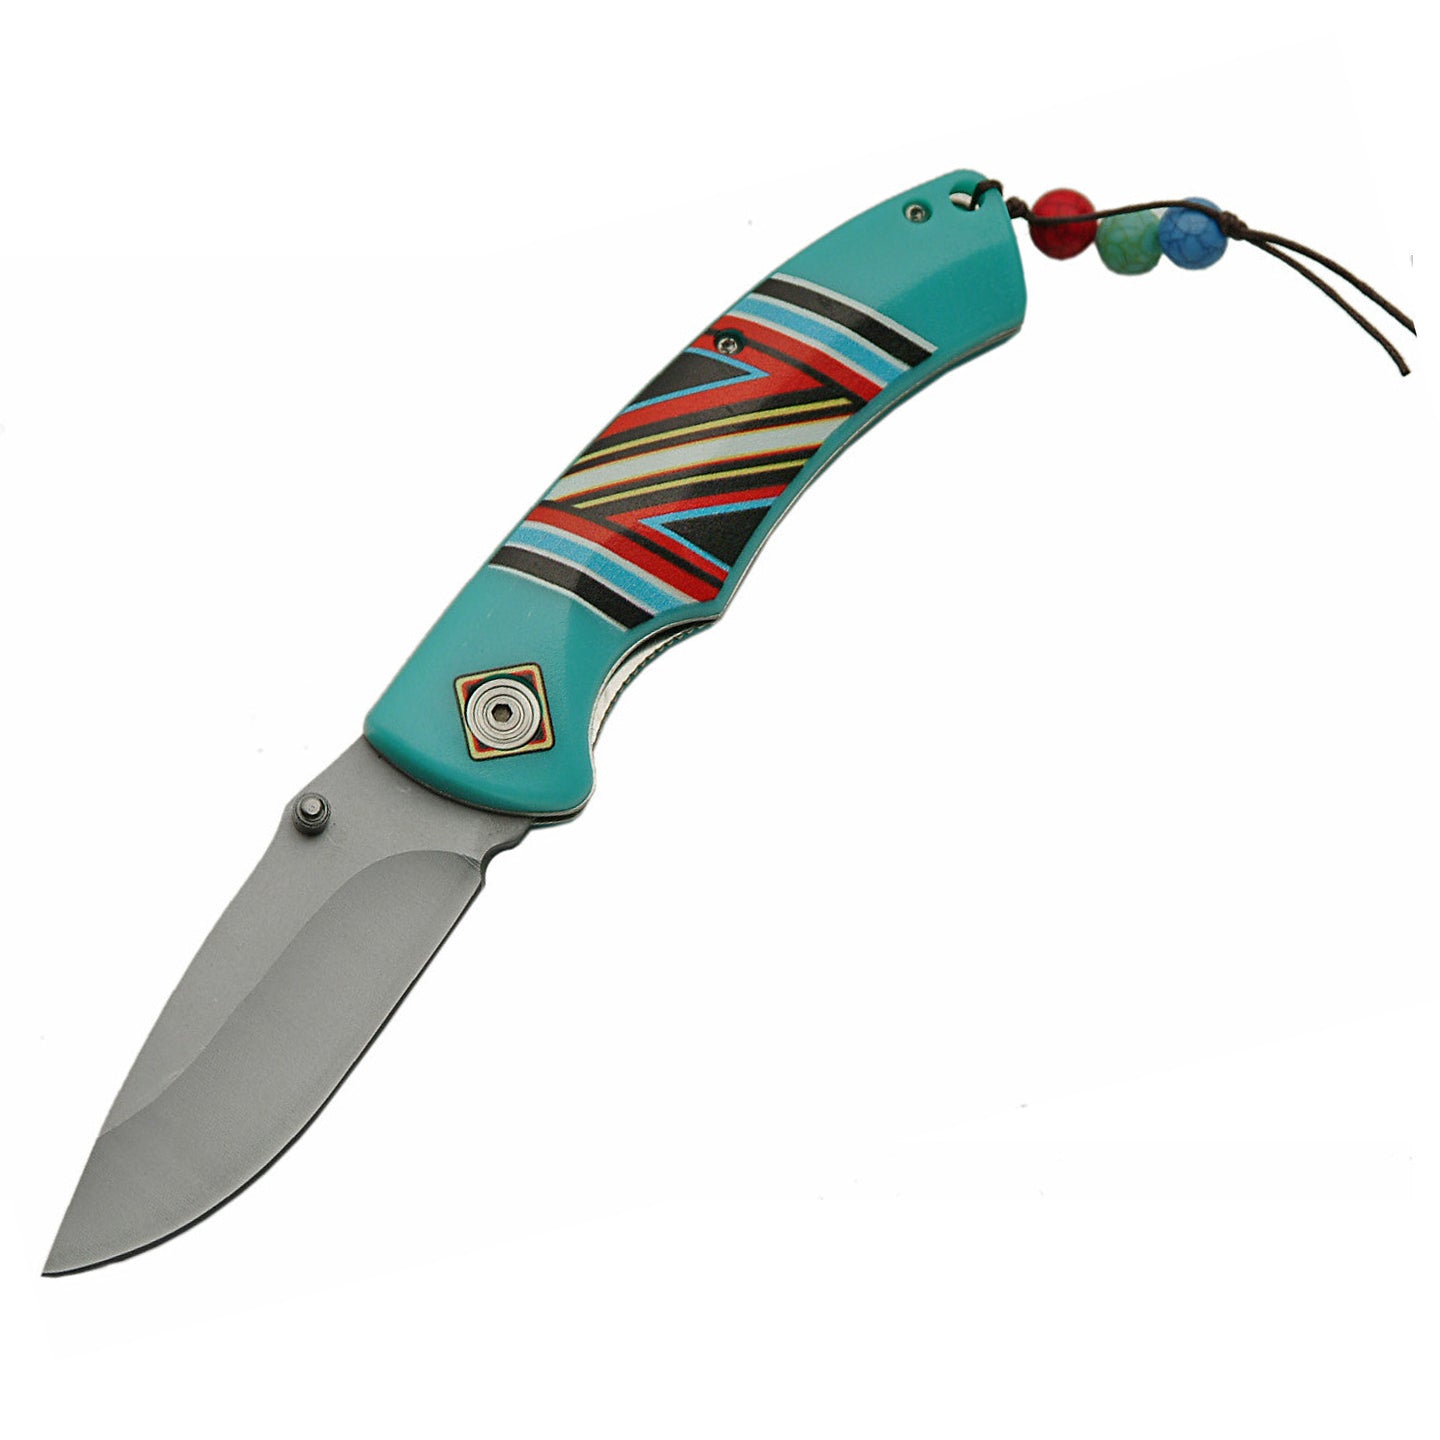 Native American Indian pocket knife - stripes